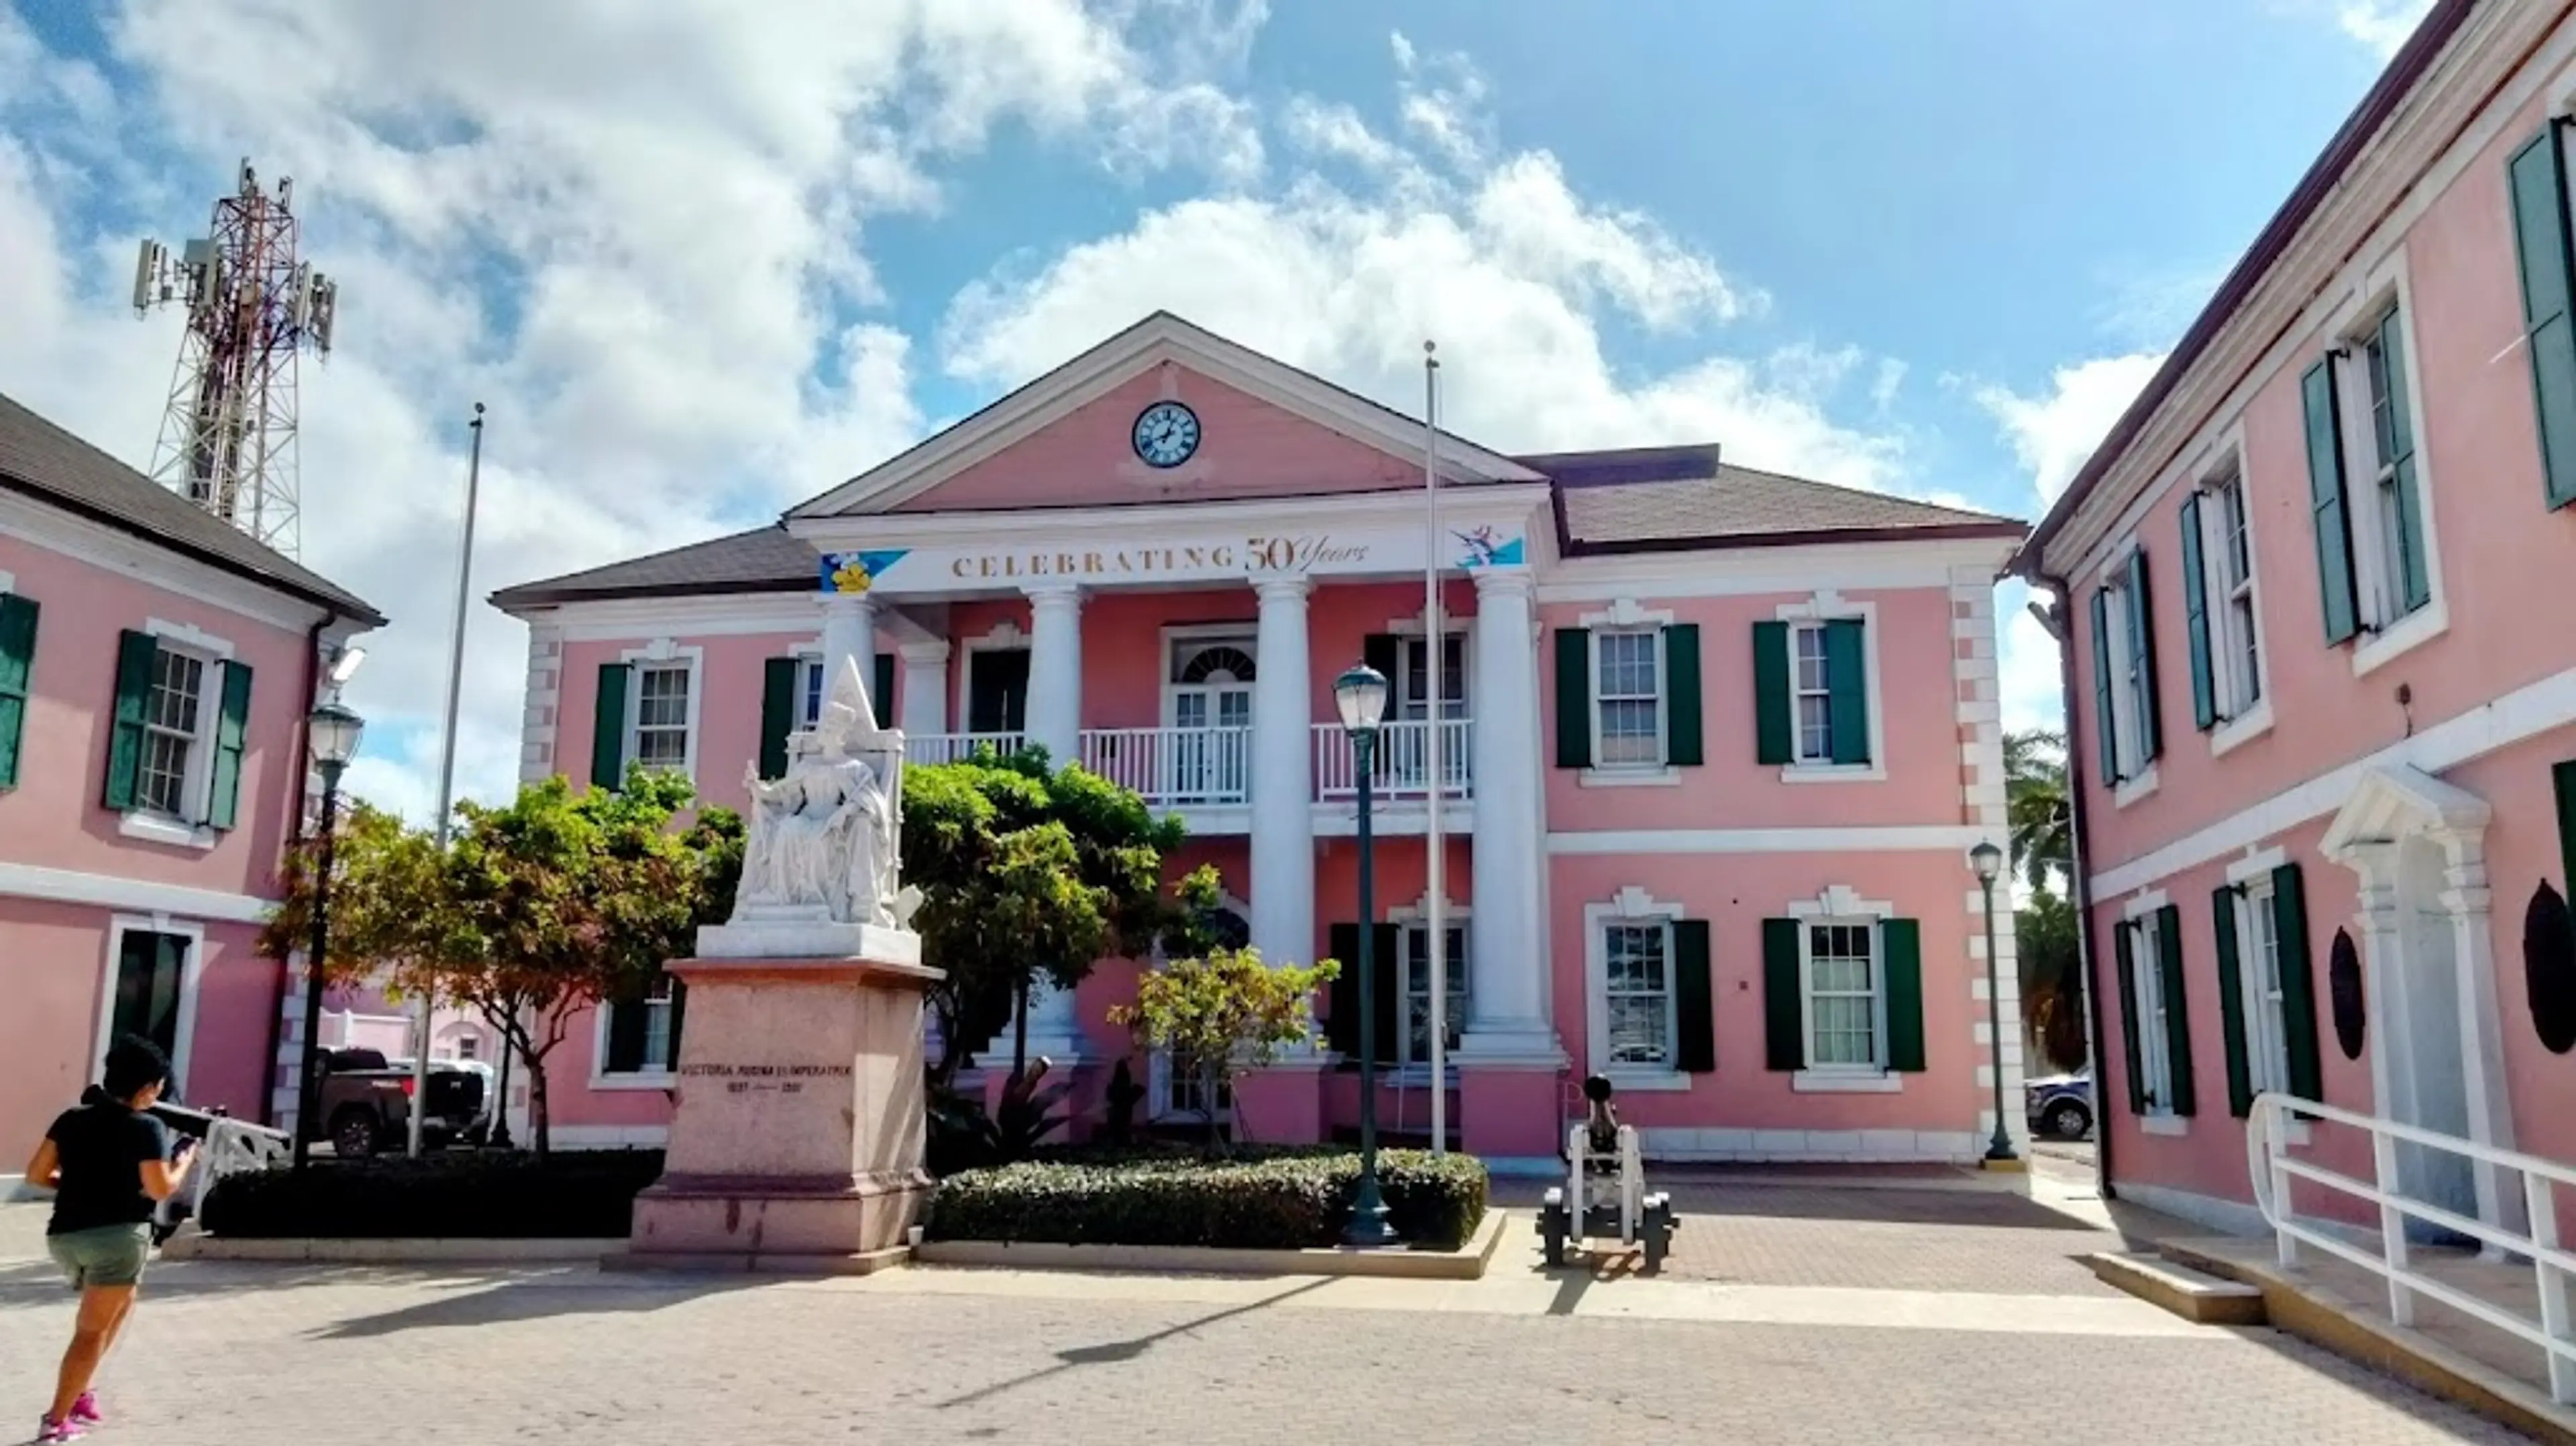 Nassau's historic district